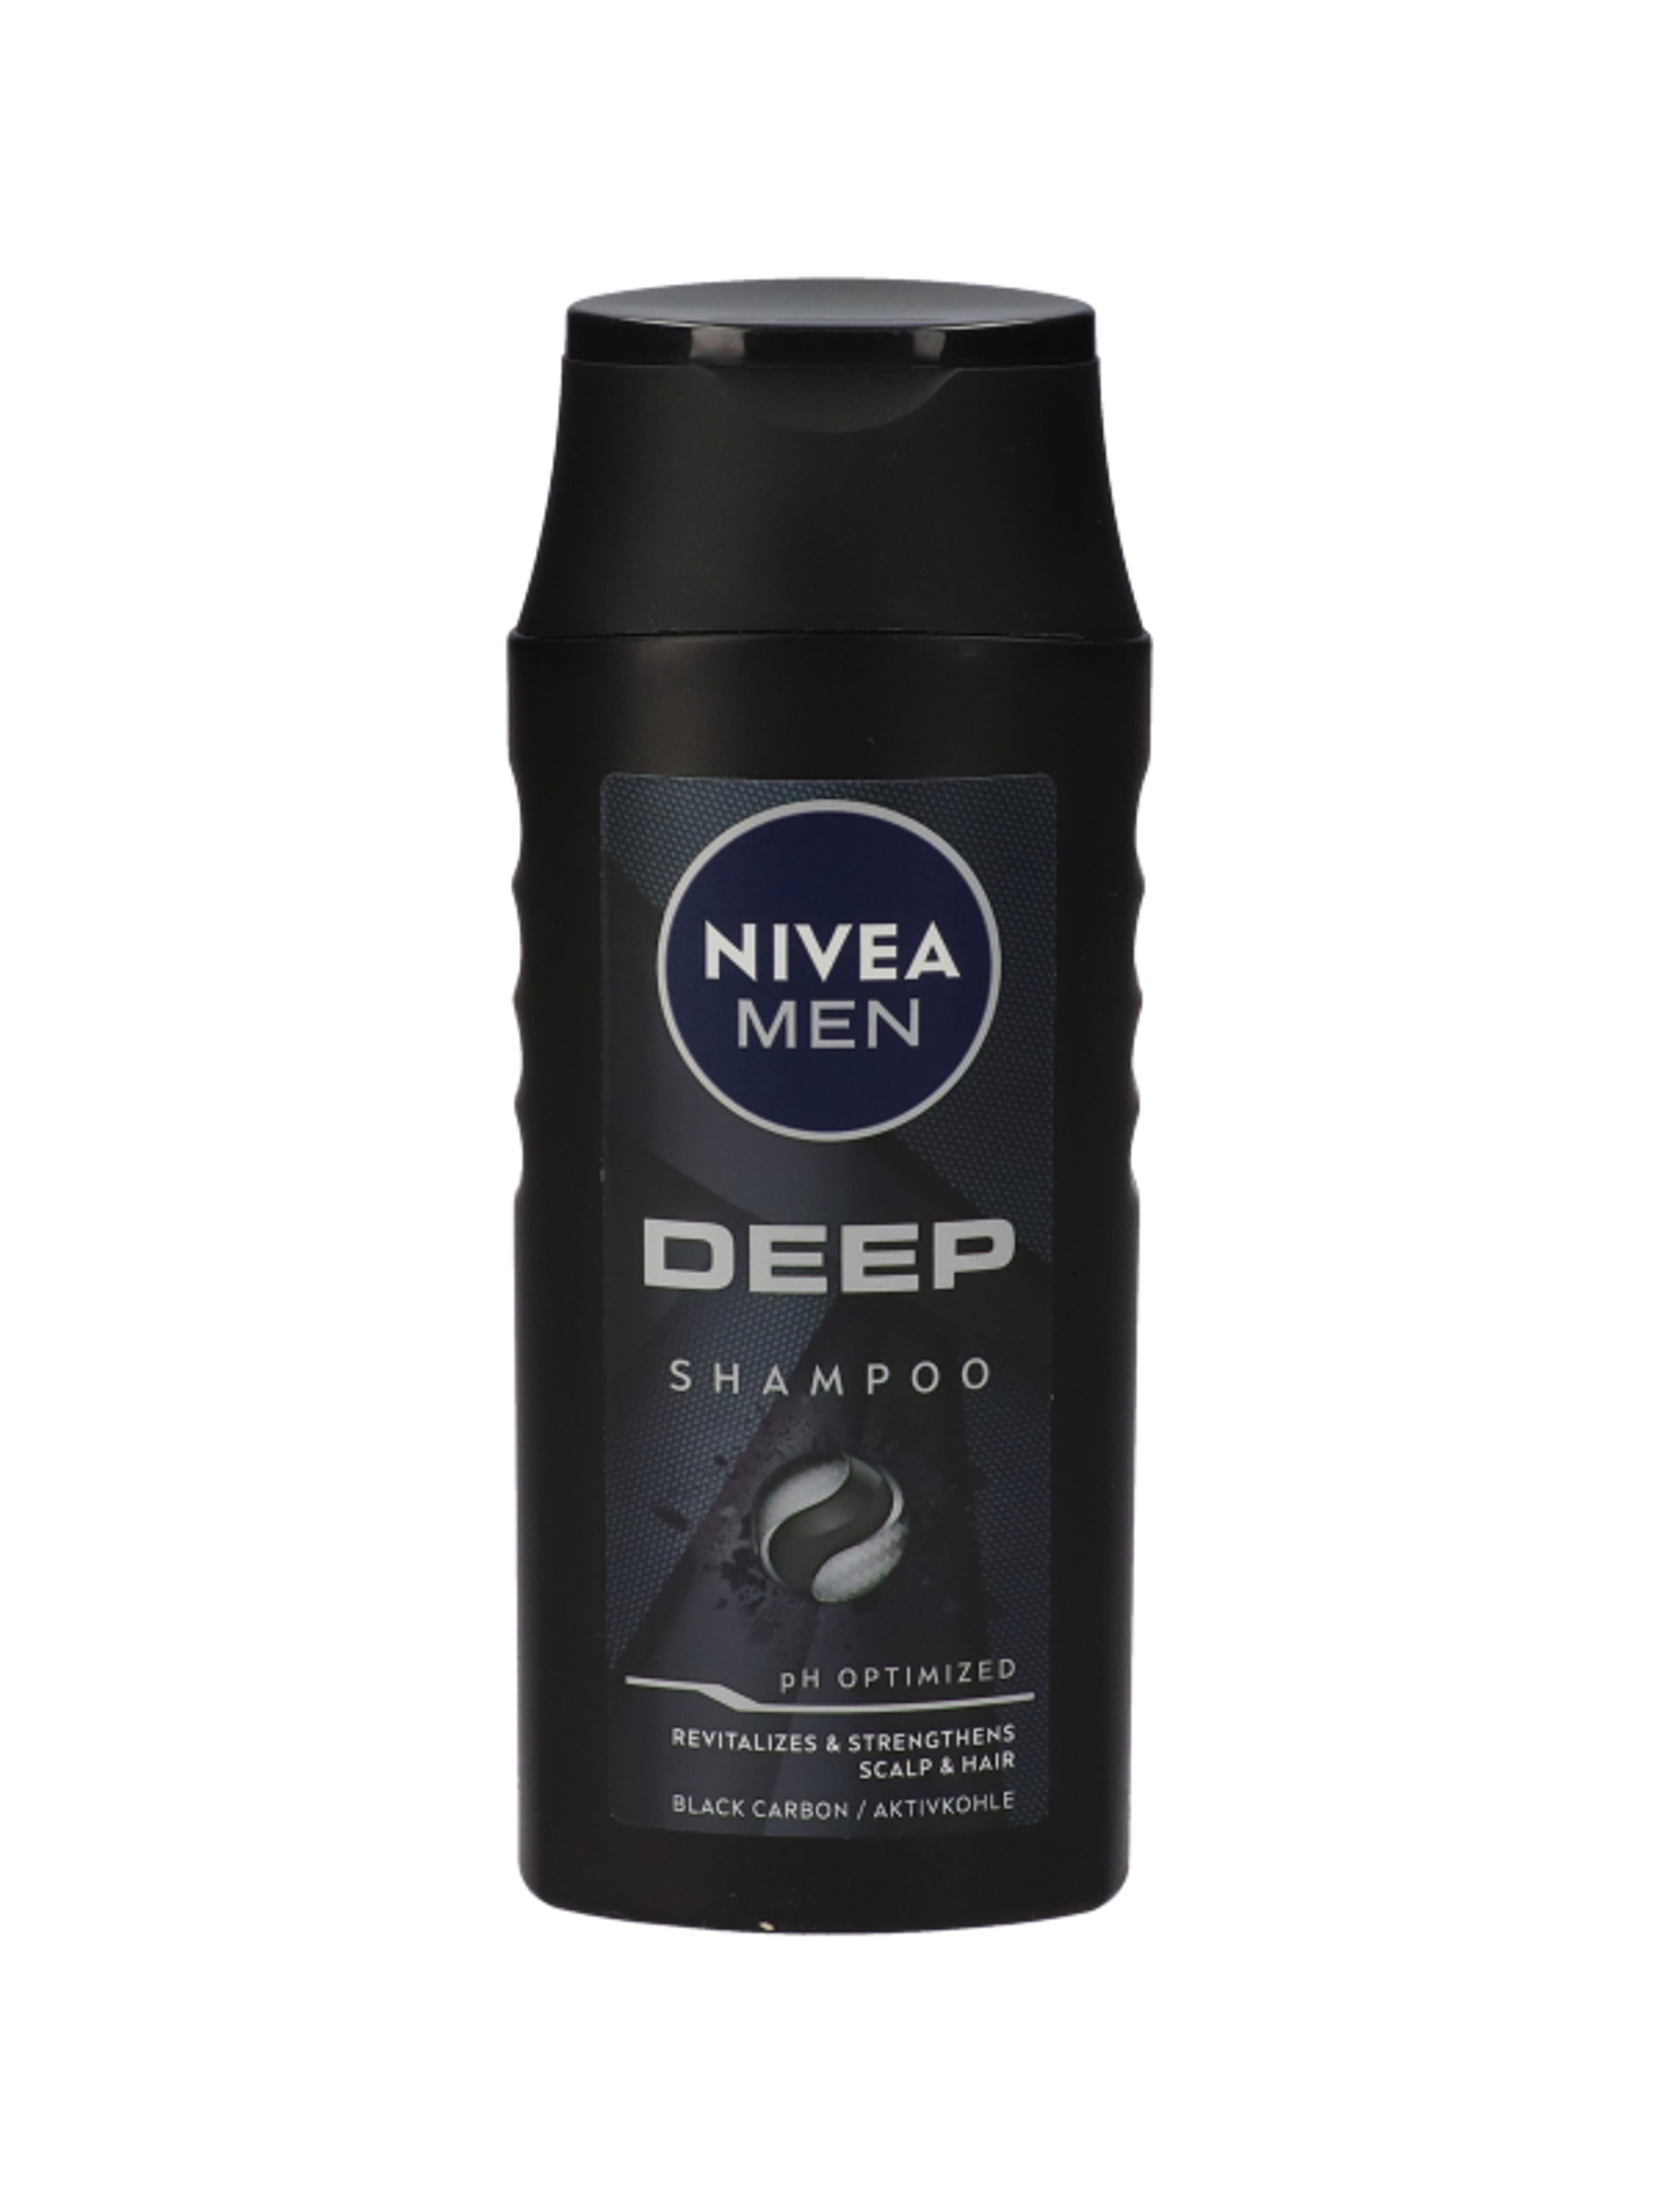 Nivea Men Deep sampon - 250 ml-2